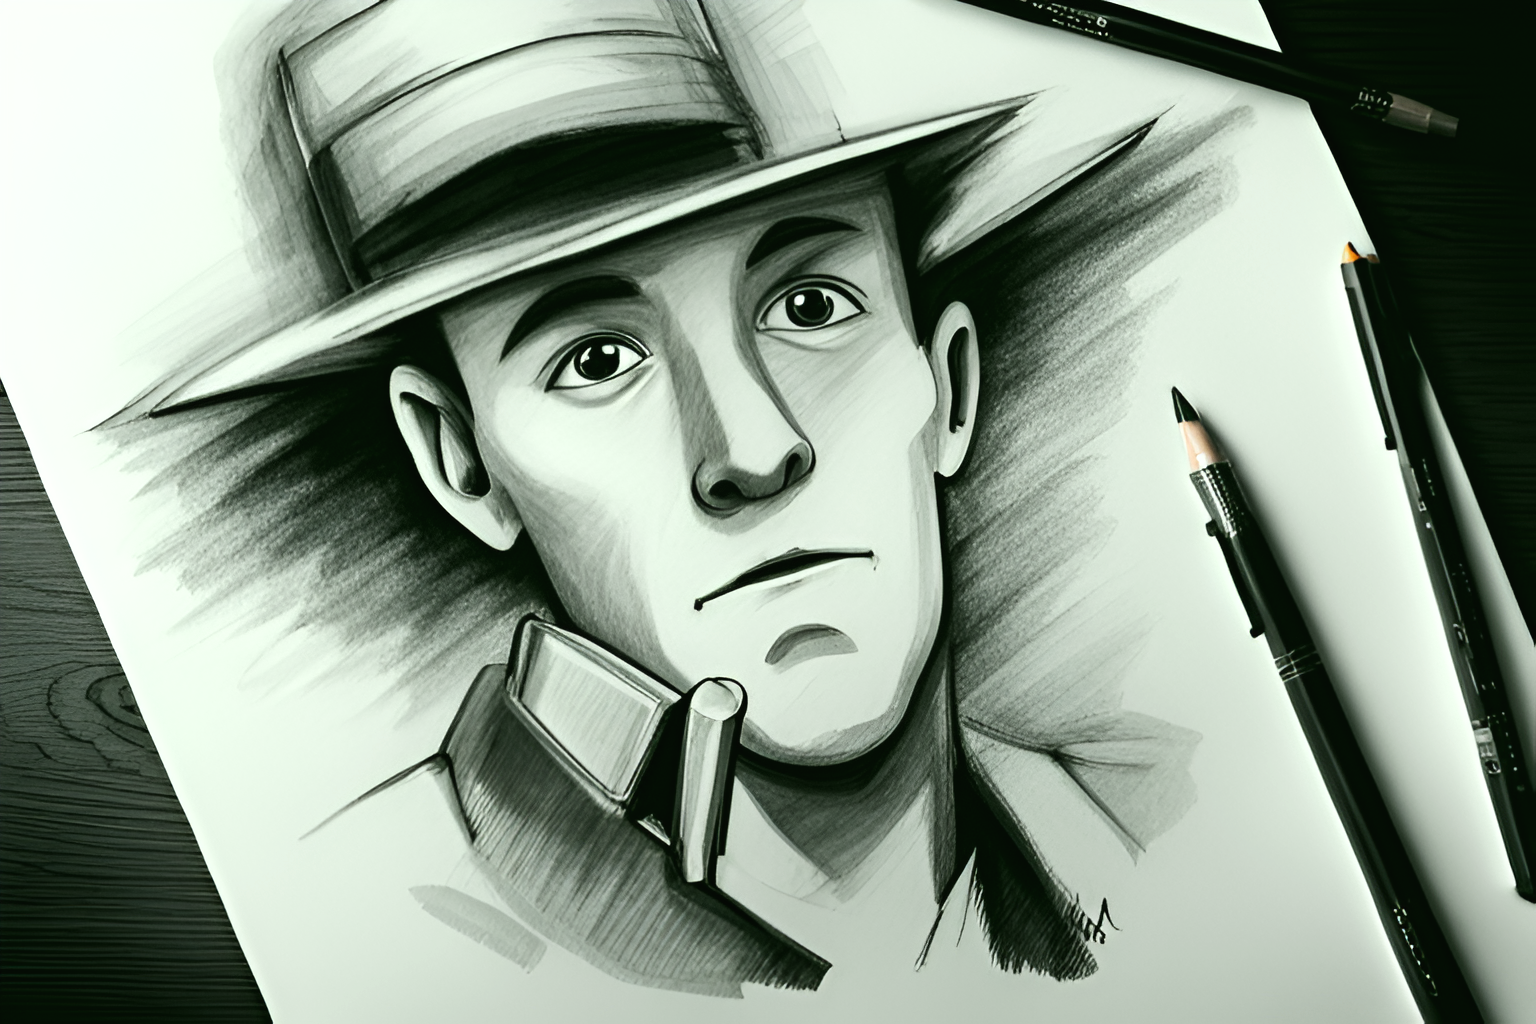 A pencil drawing of Inspector Gadget